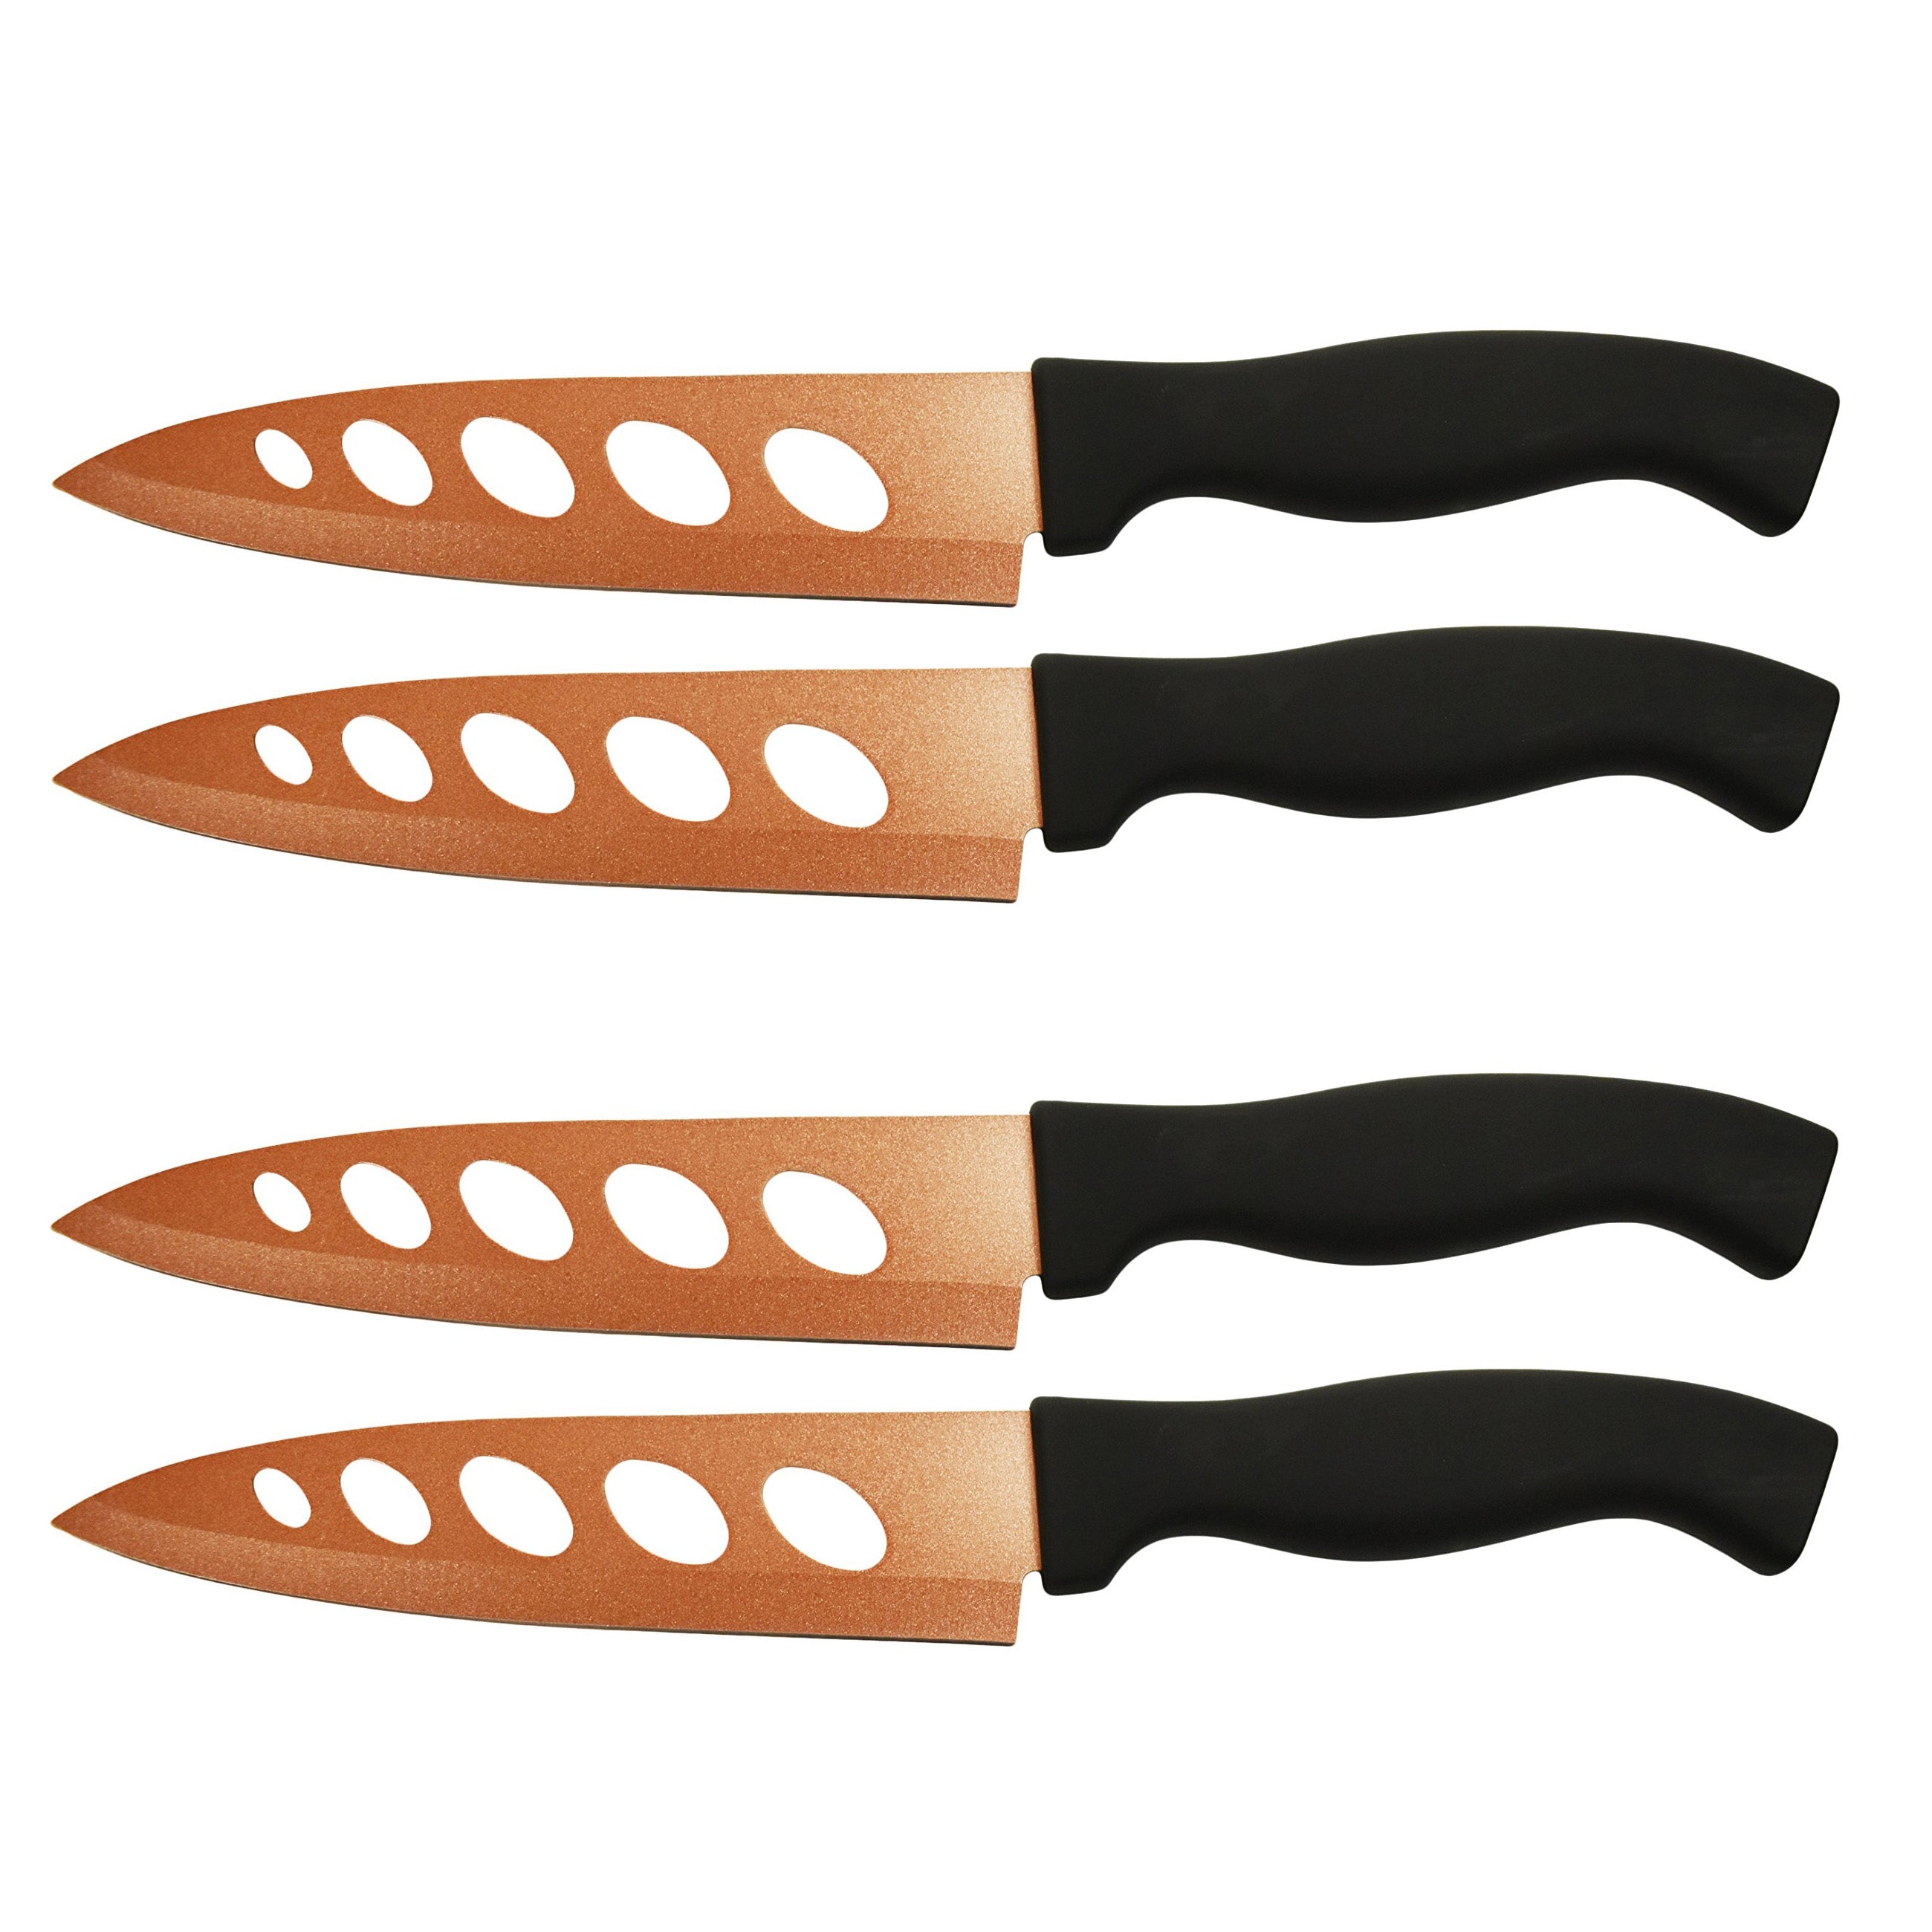 Copper Knife - 4 Pack. Never Needs Sharpening - COPPER KNIFE Stainless Steel Stays Sharp Forever